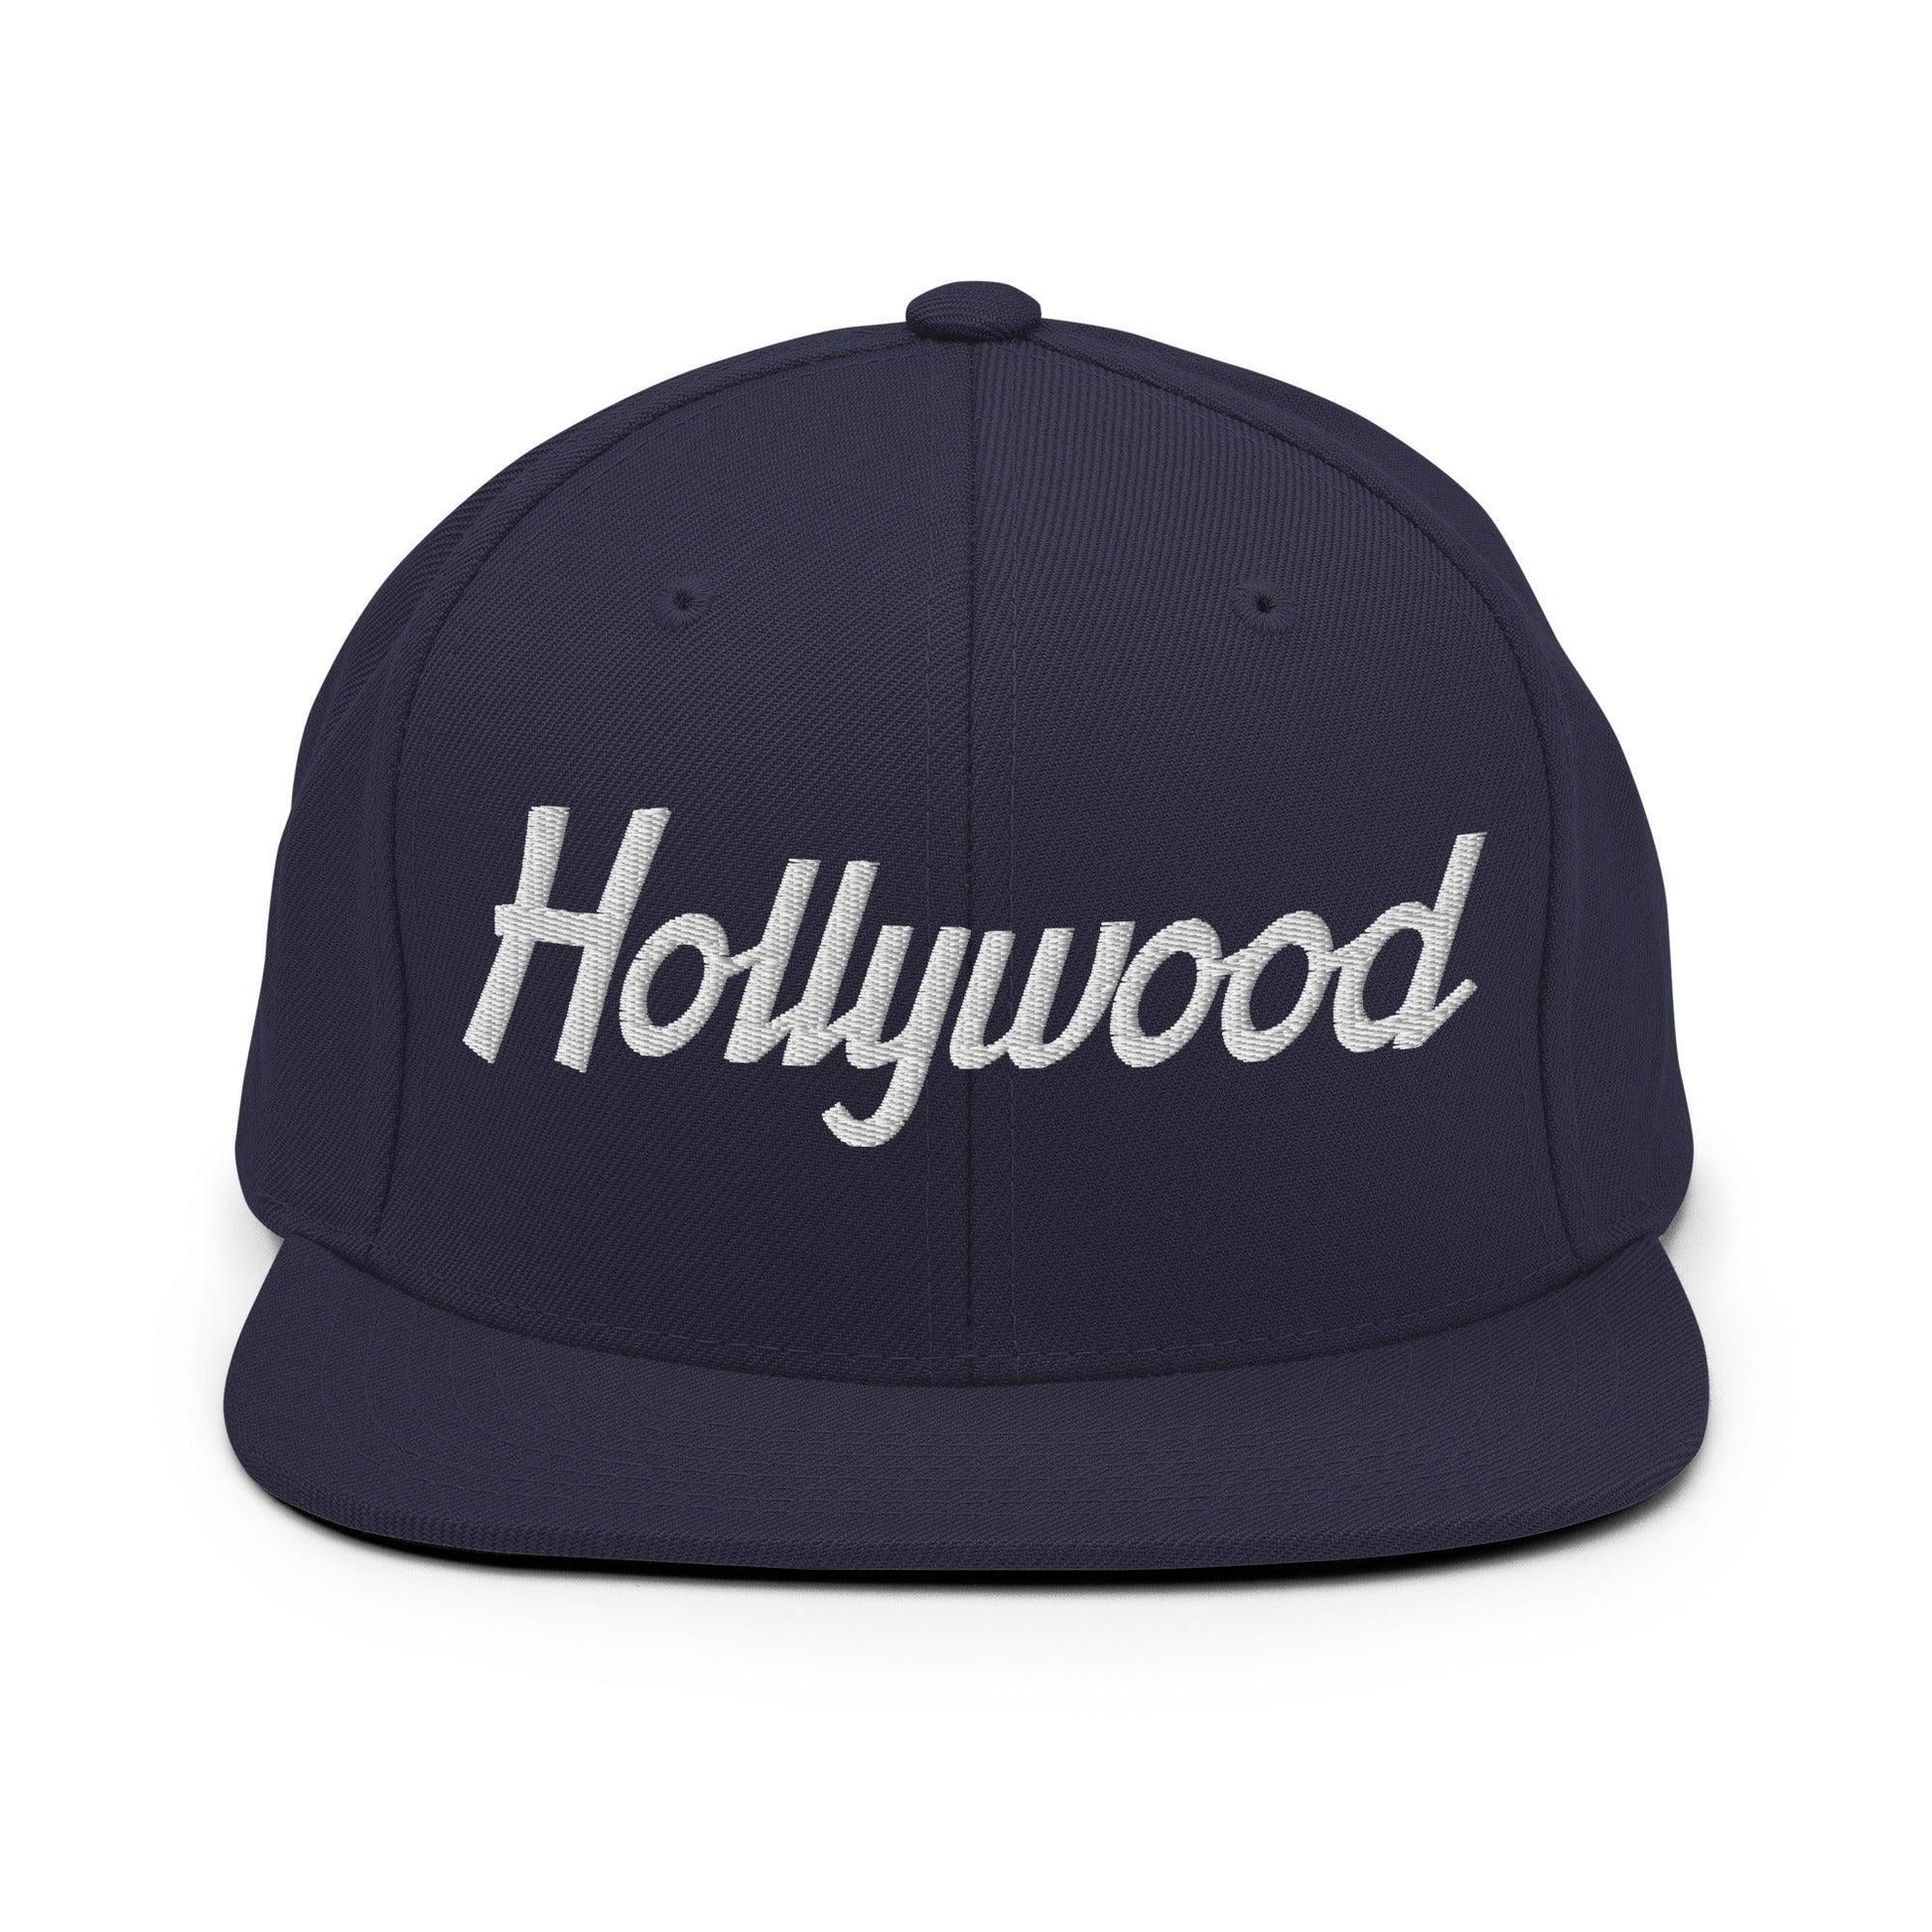 Hollywood Script Snapback Hat Navy